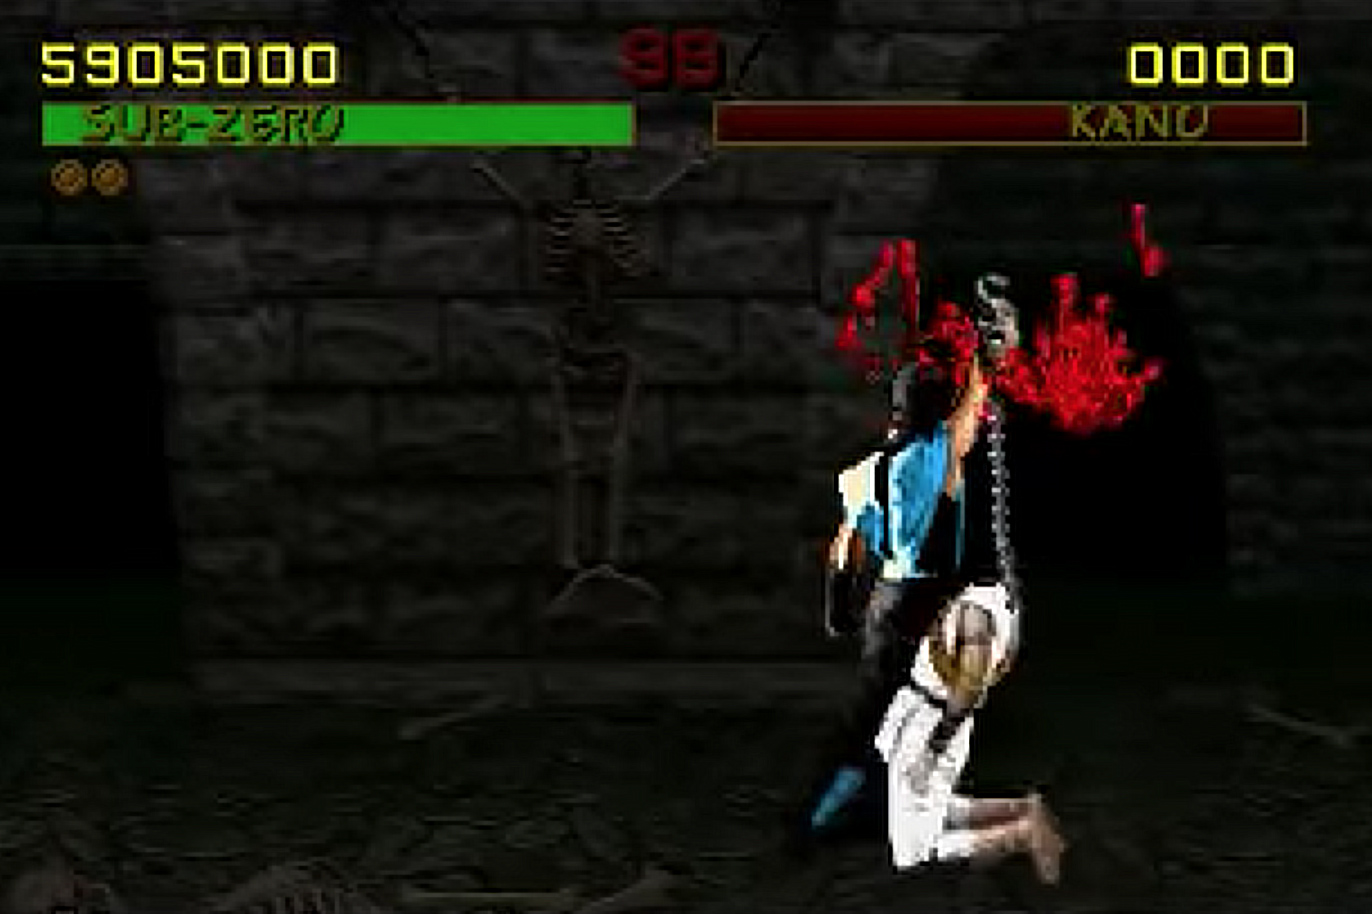 Ultimate Mortal Kombat 3 - Fatality 1 - Mileena 